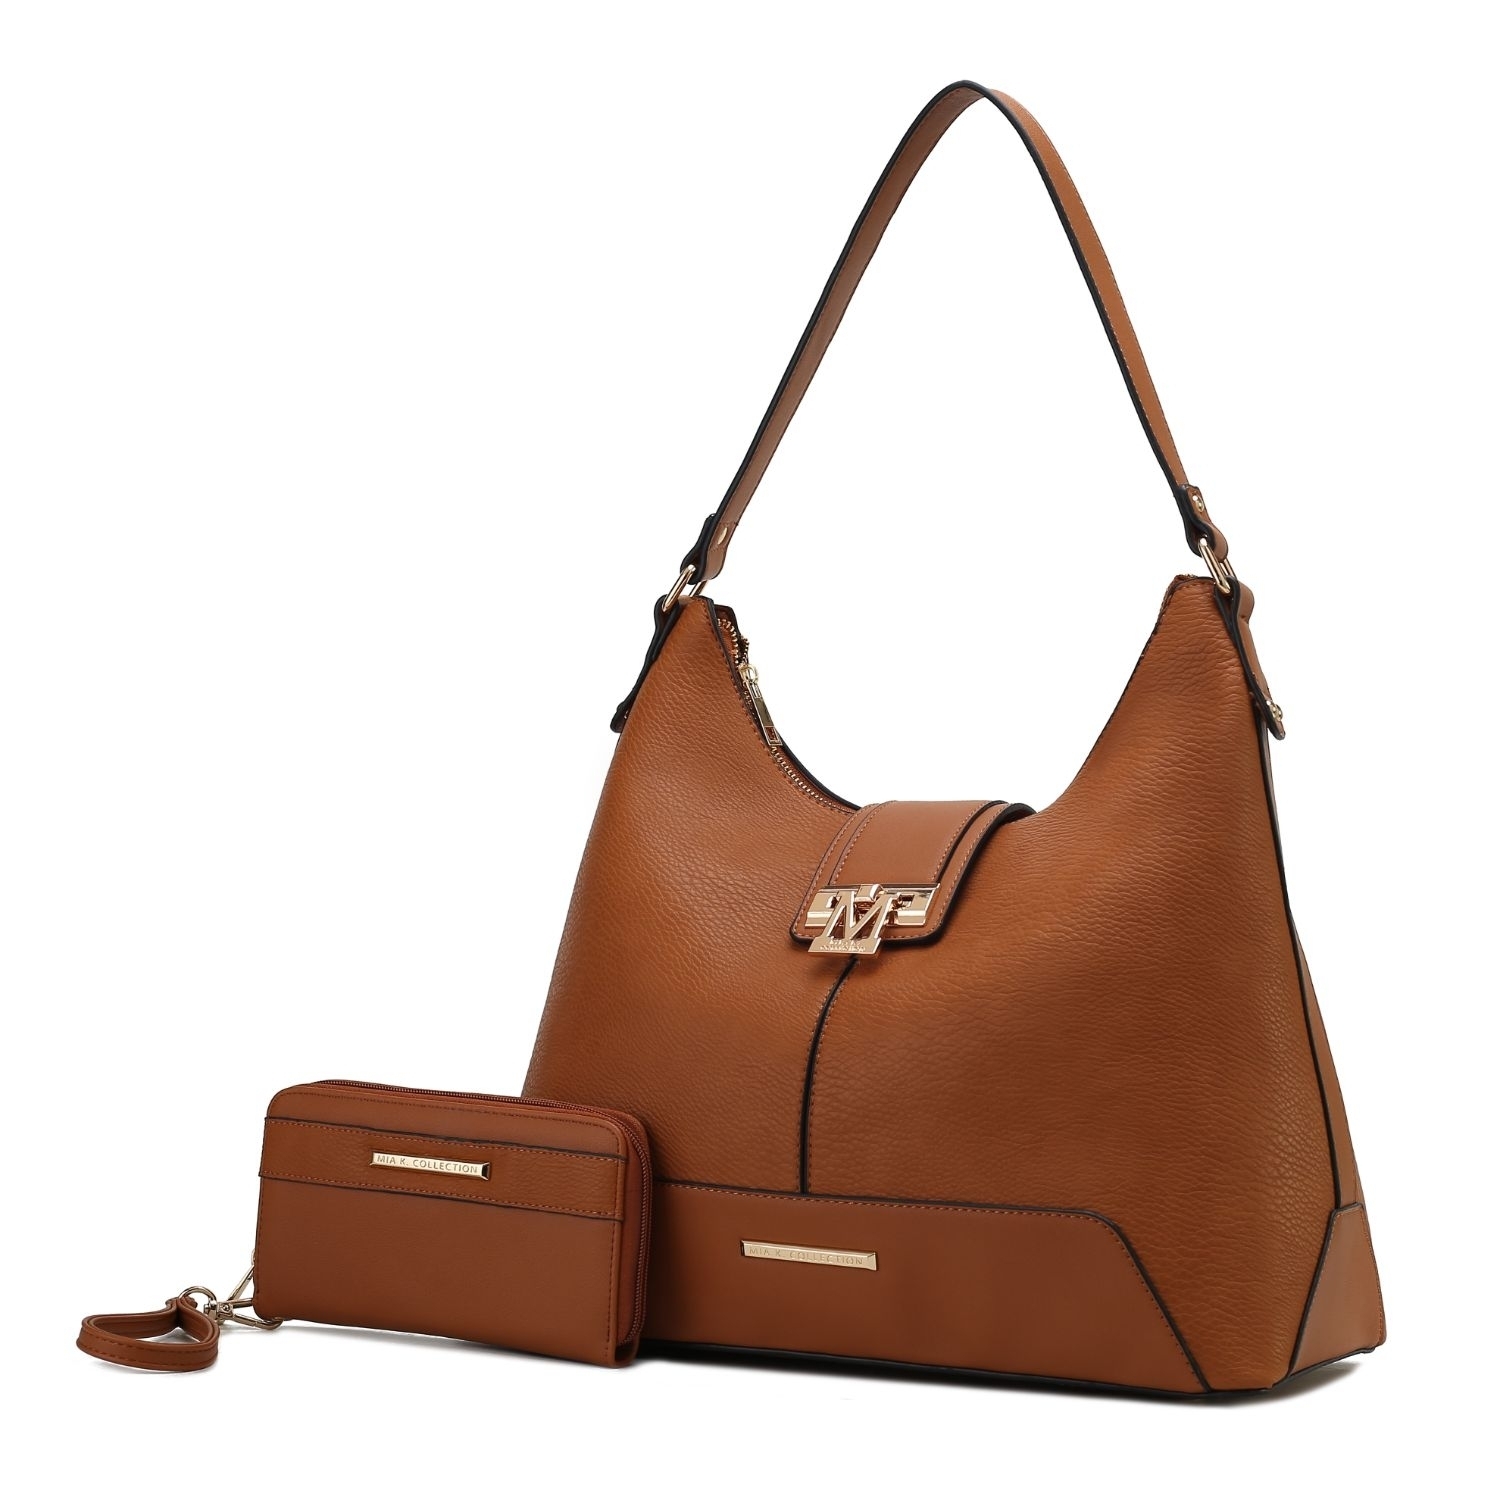 MKF Collection Graciela Hobo Handbag By Mia K. - Olive